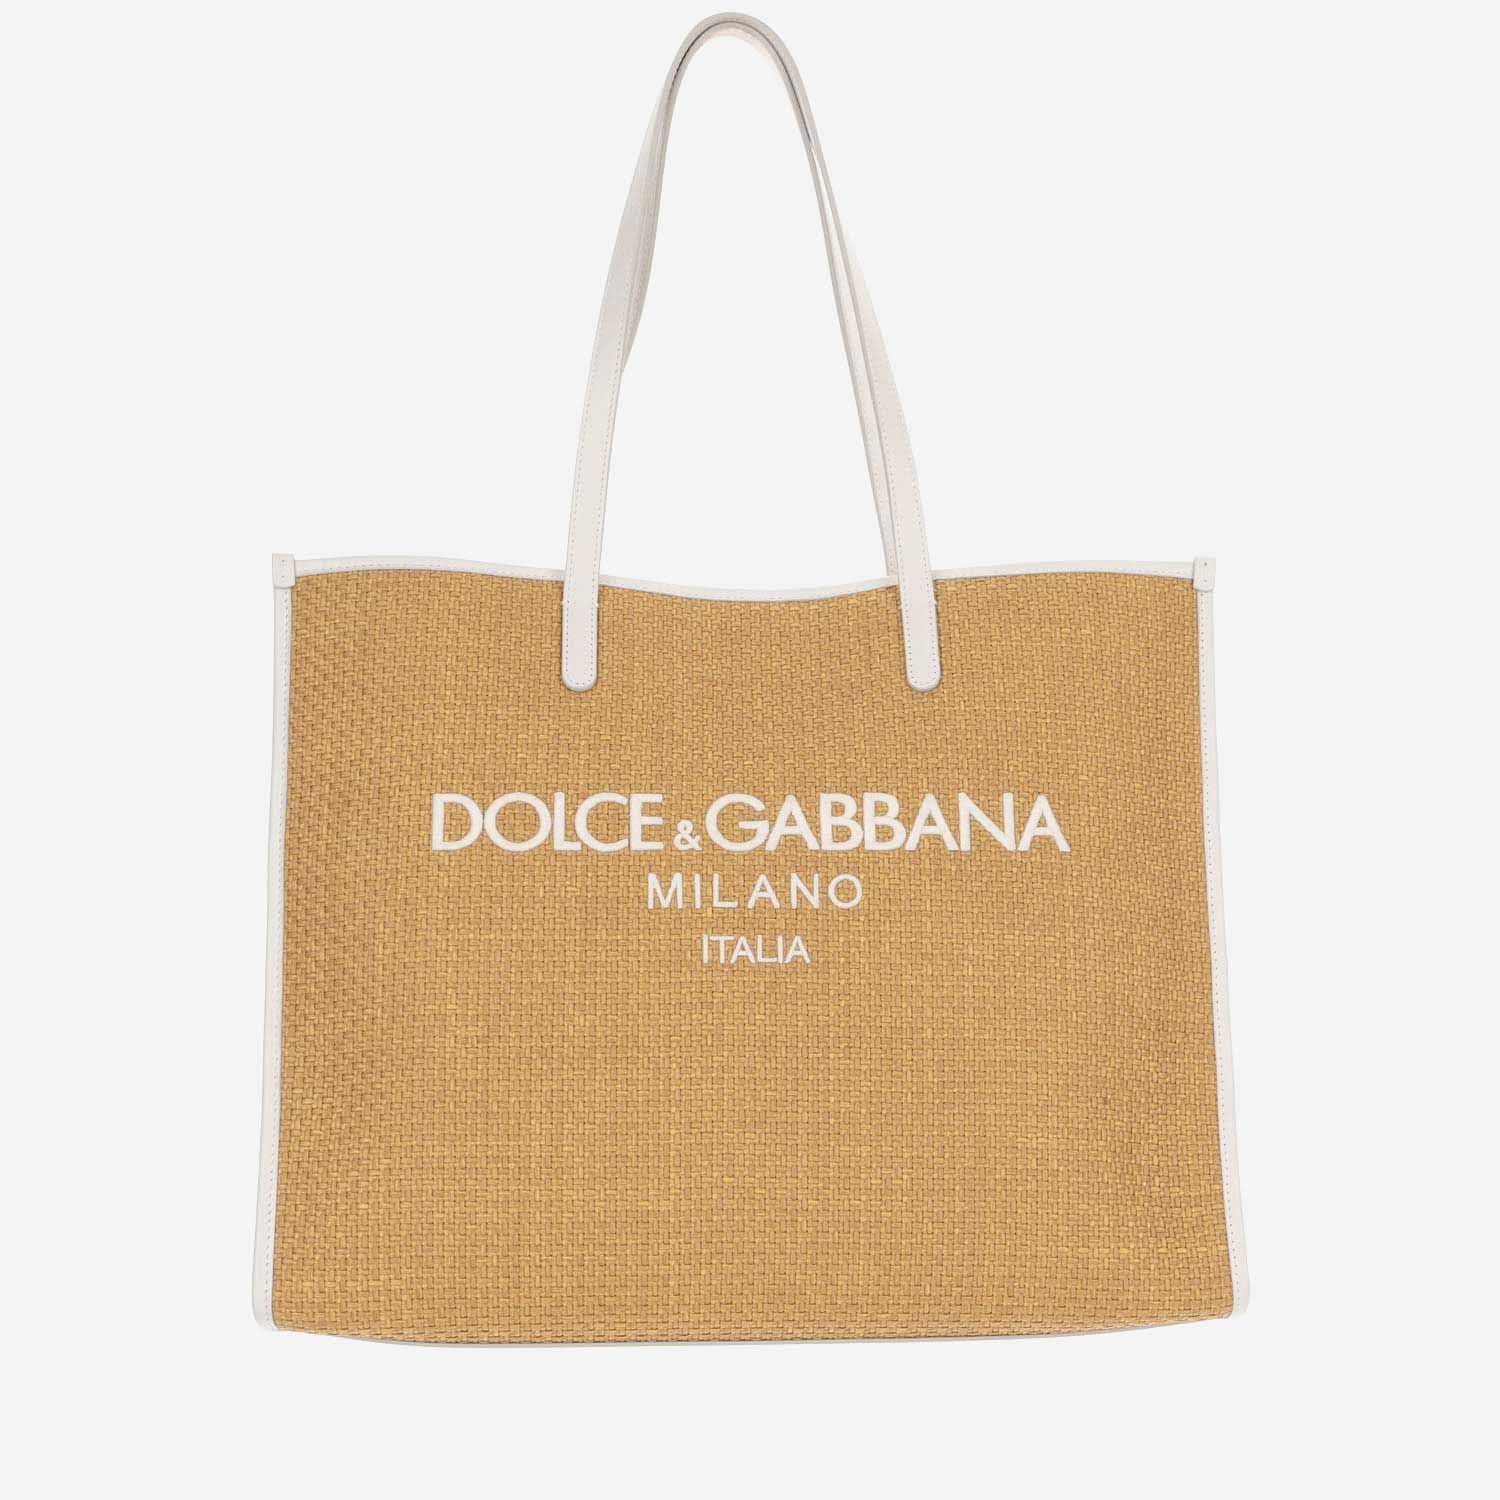 Dolce & Gabbana Large Shopping Bag In Miele/latte